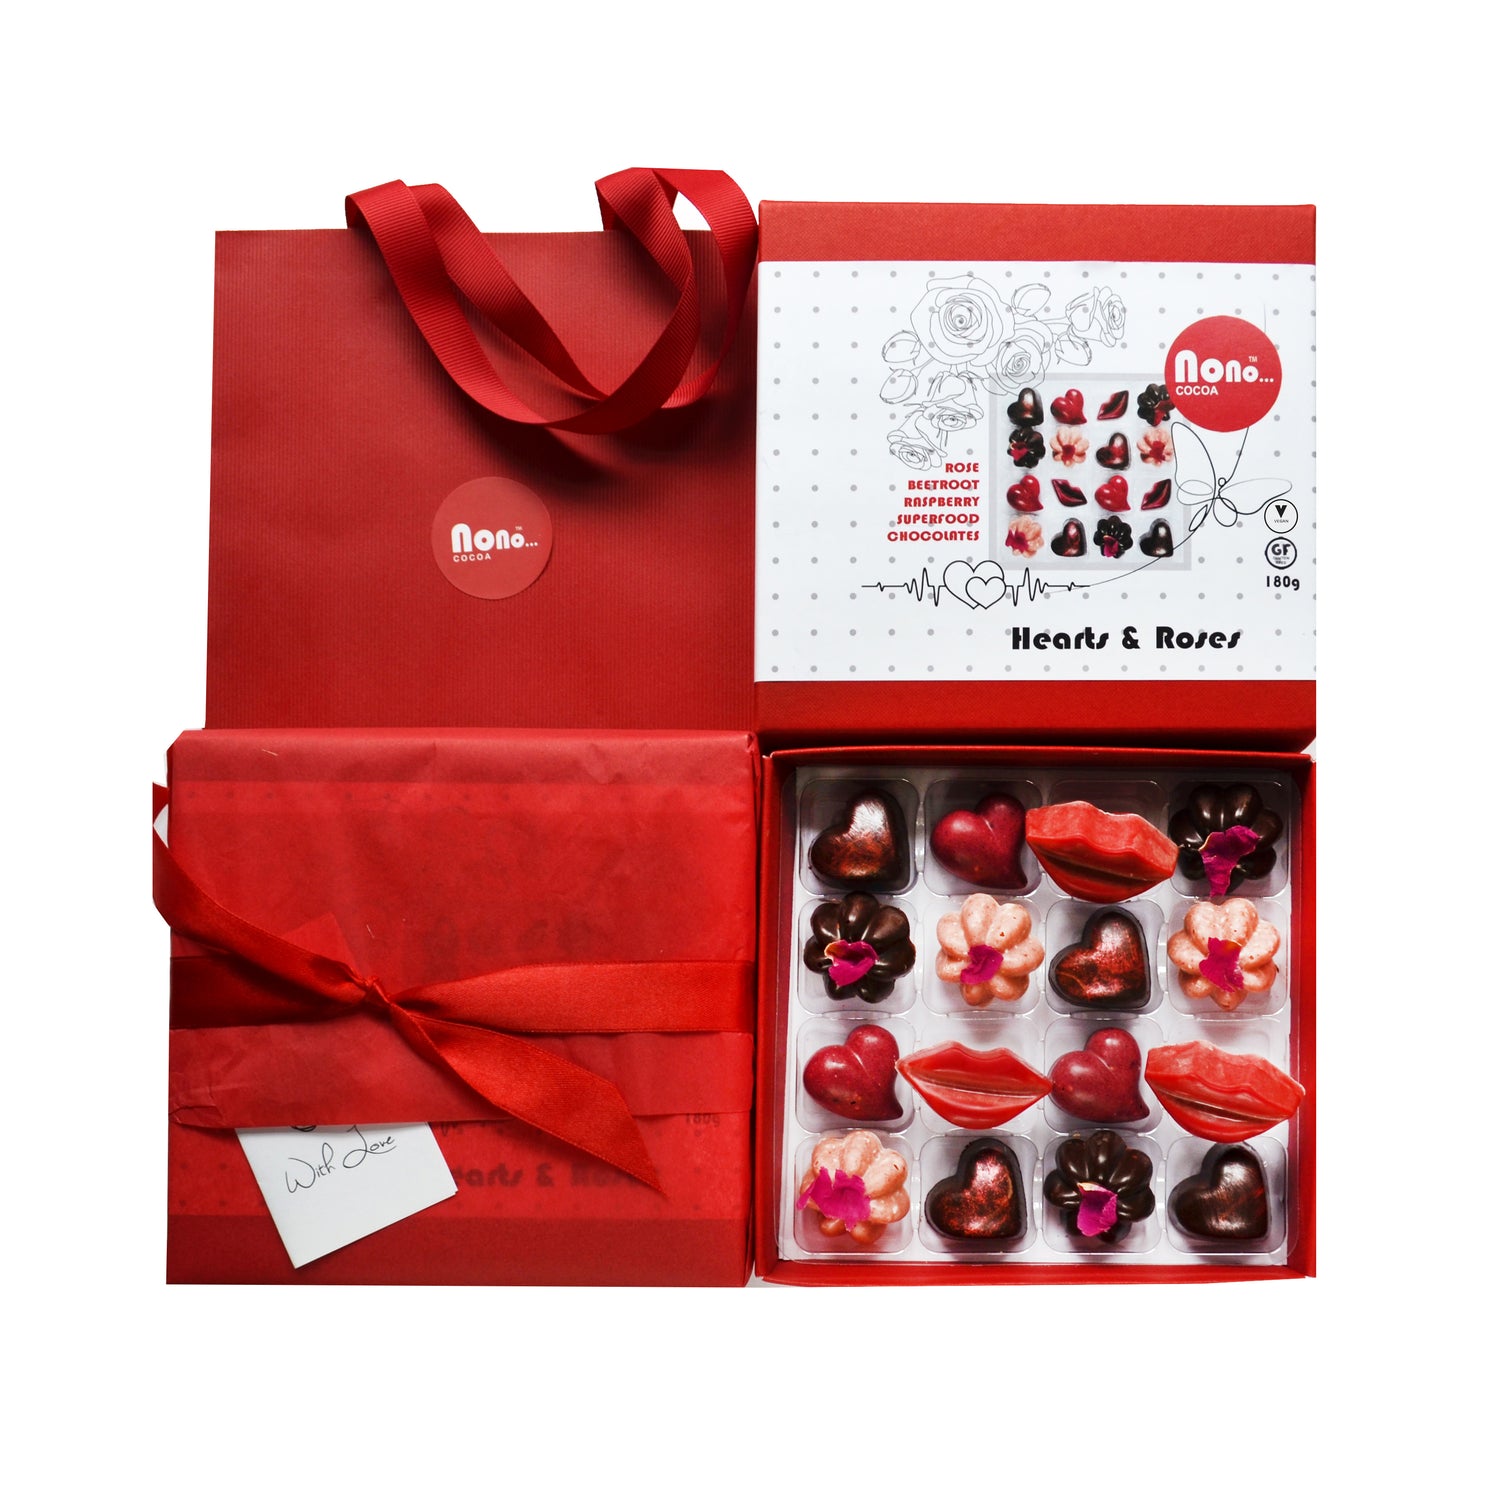 NEW! Nono Cocoa - Hearts & Roses - Vegan Chocolate Gift Box